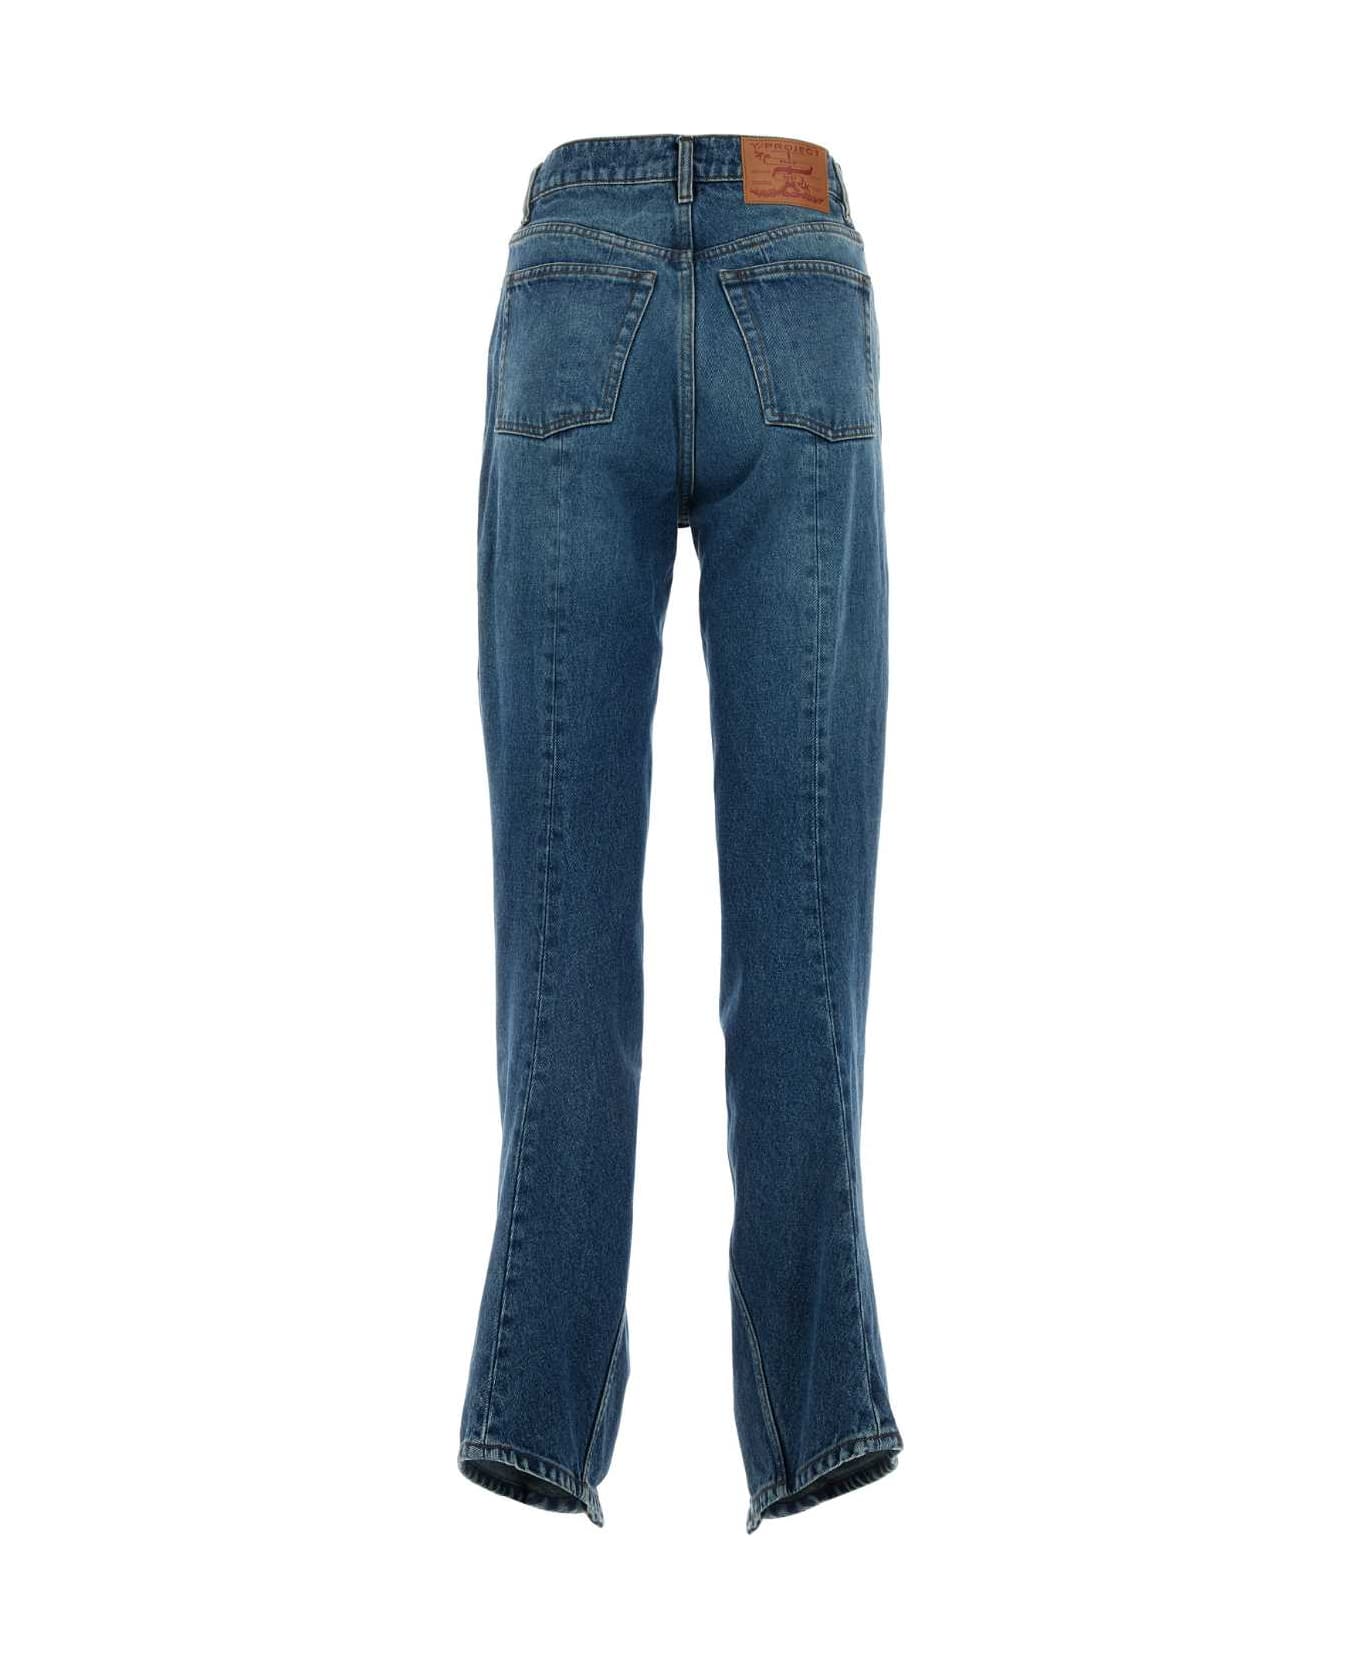 Y/Project Denim Jeans - EVERGREEN VINTAGE BLUE デニム